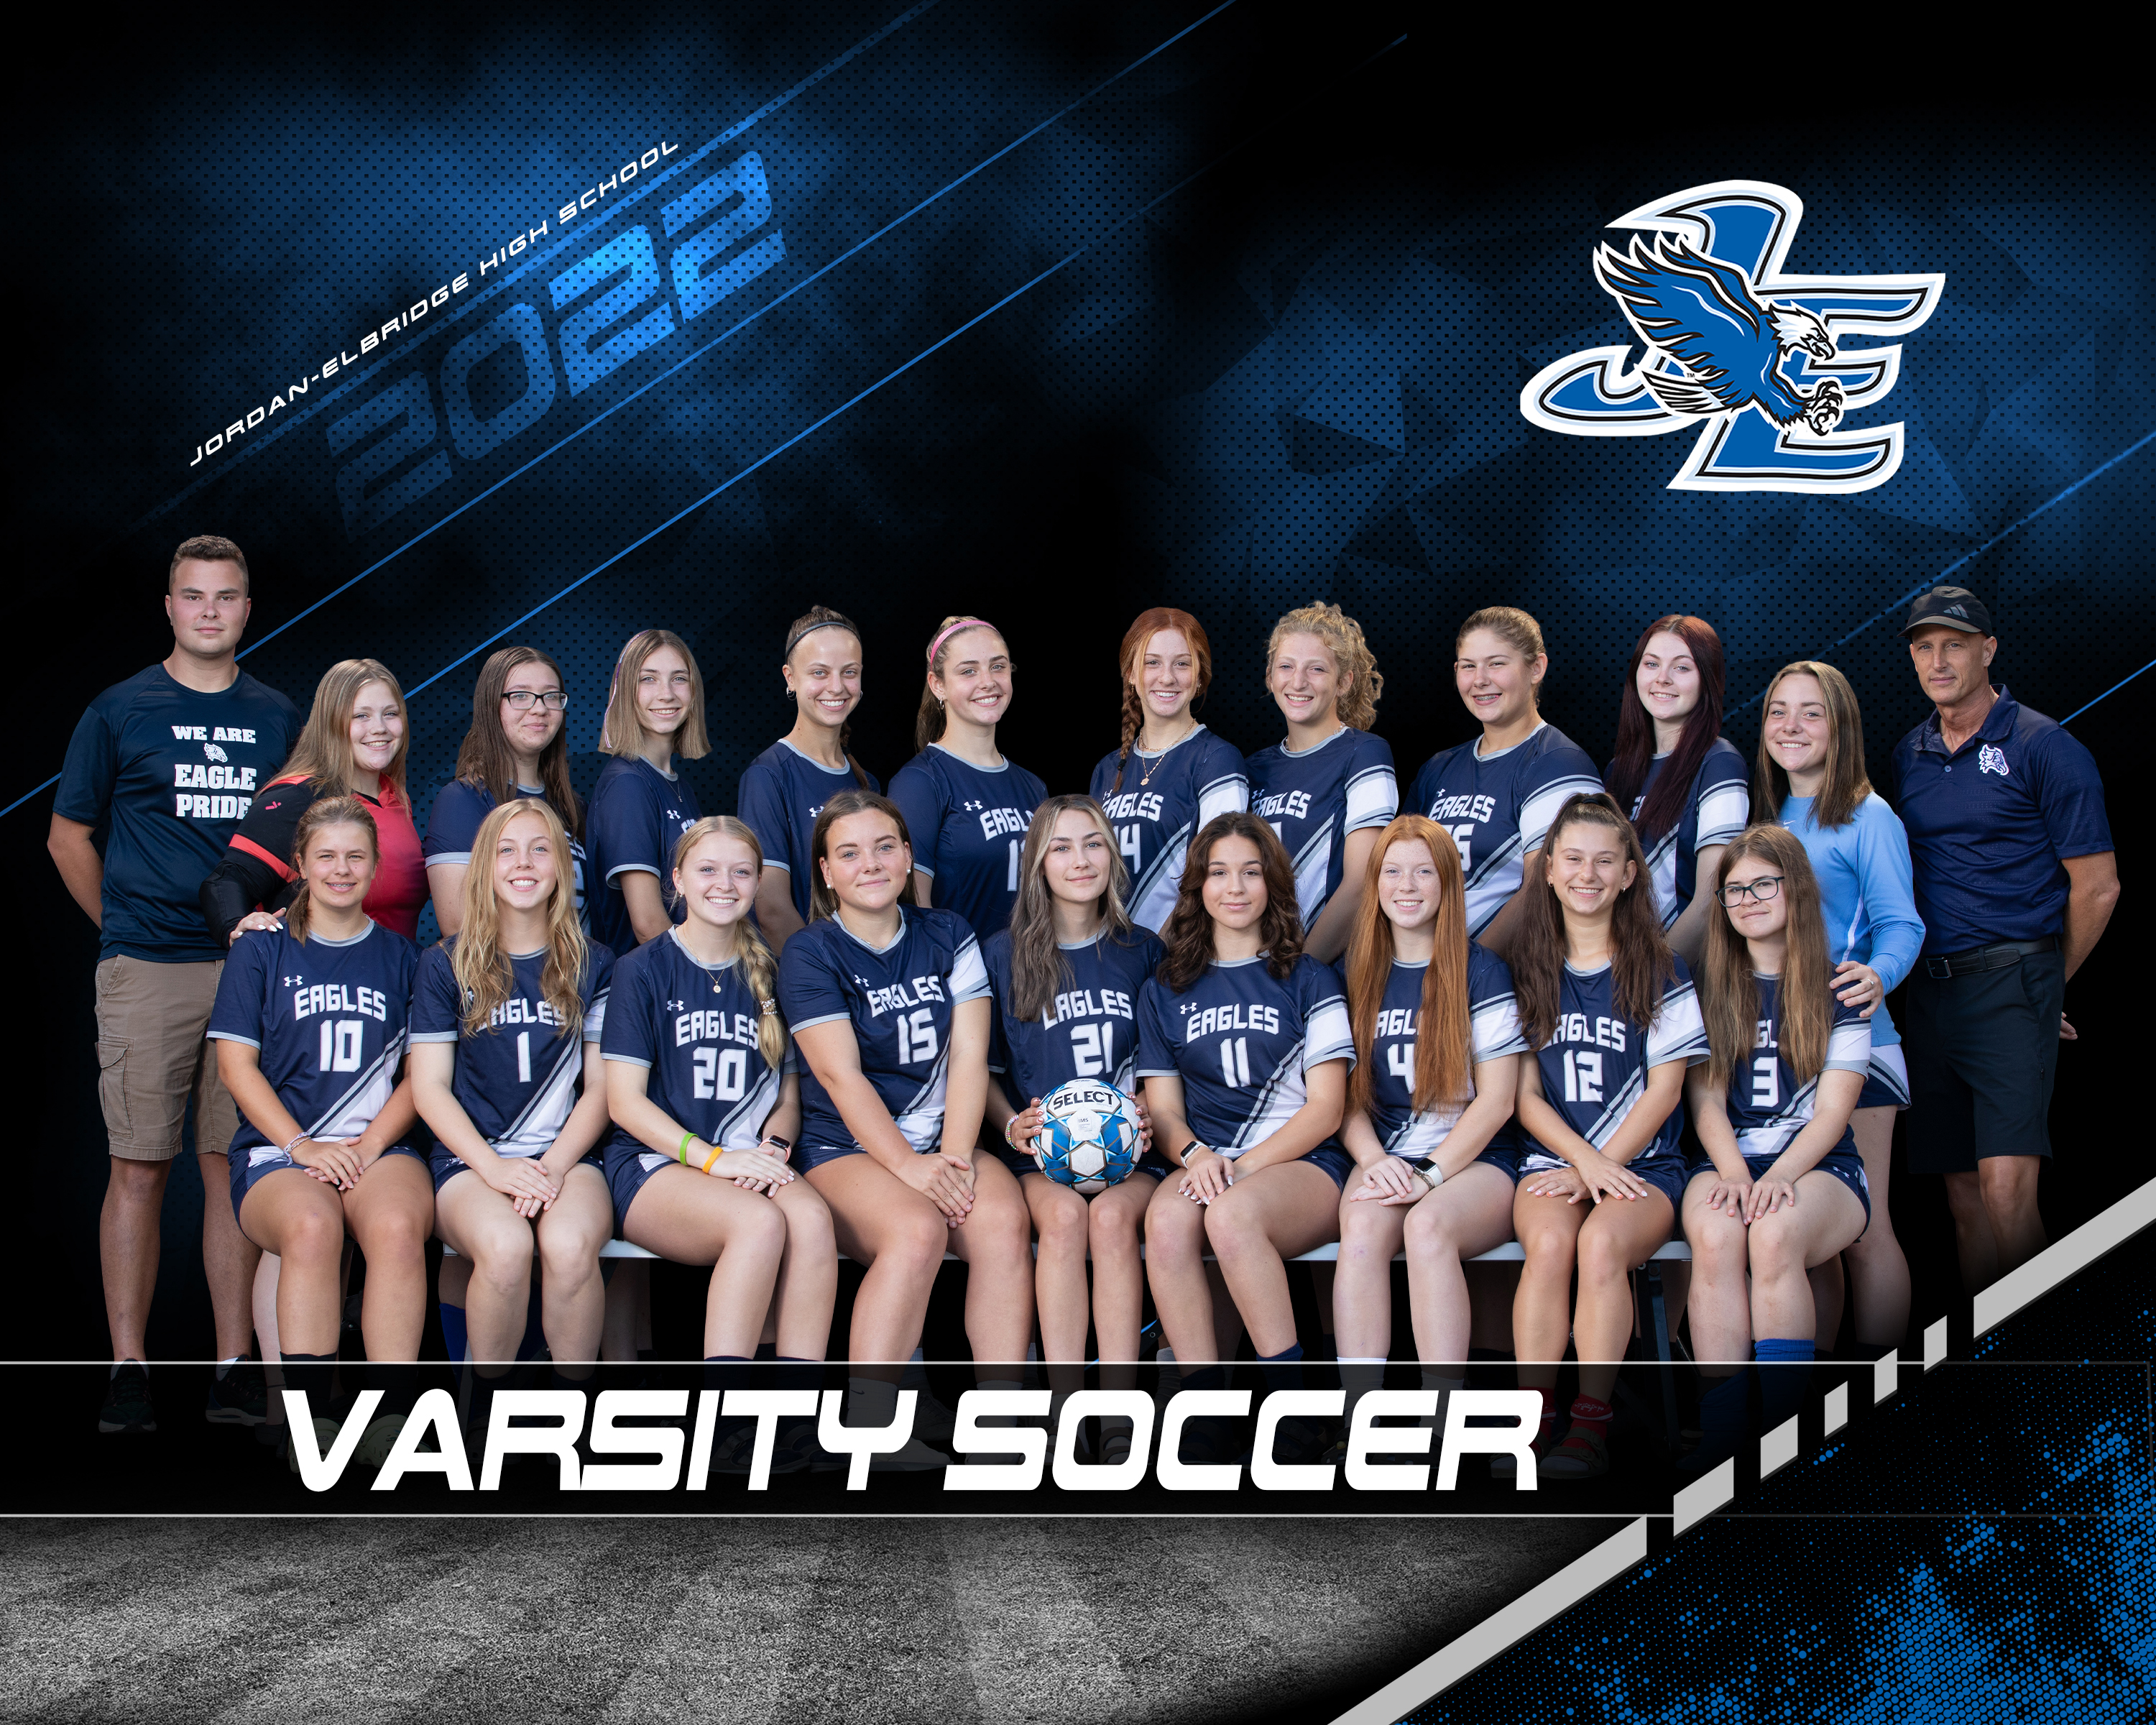 The varsity girls soccer team is a scholar-athlete team